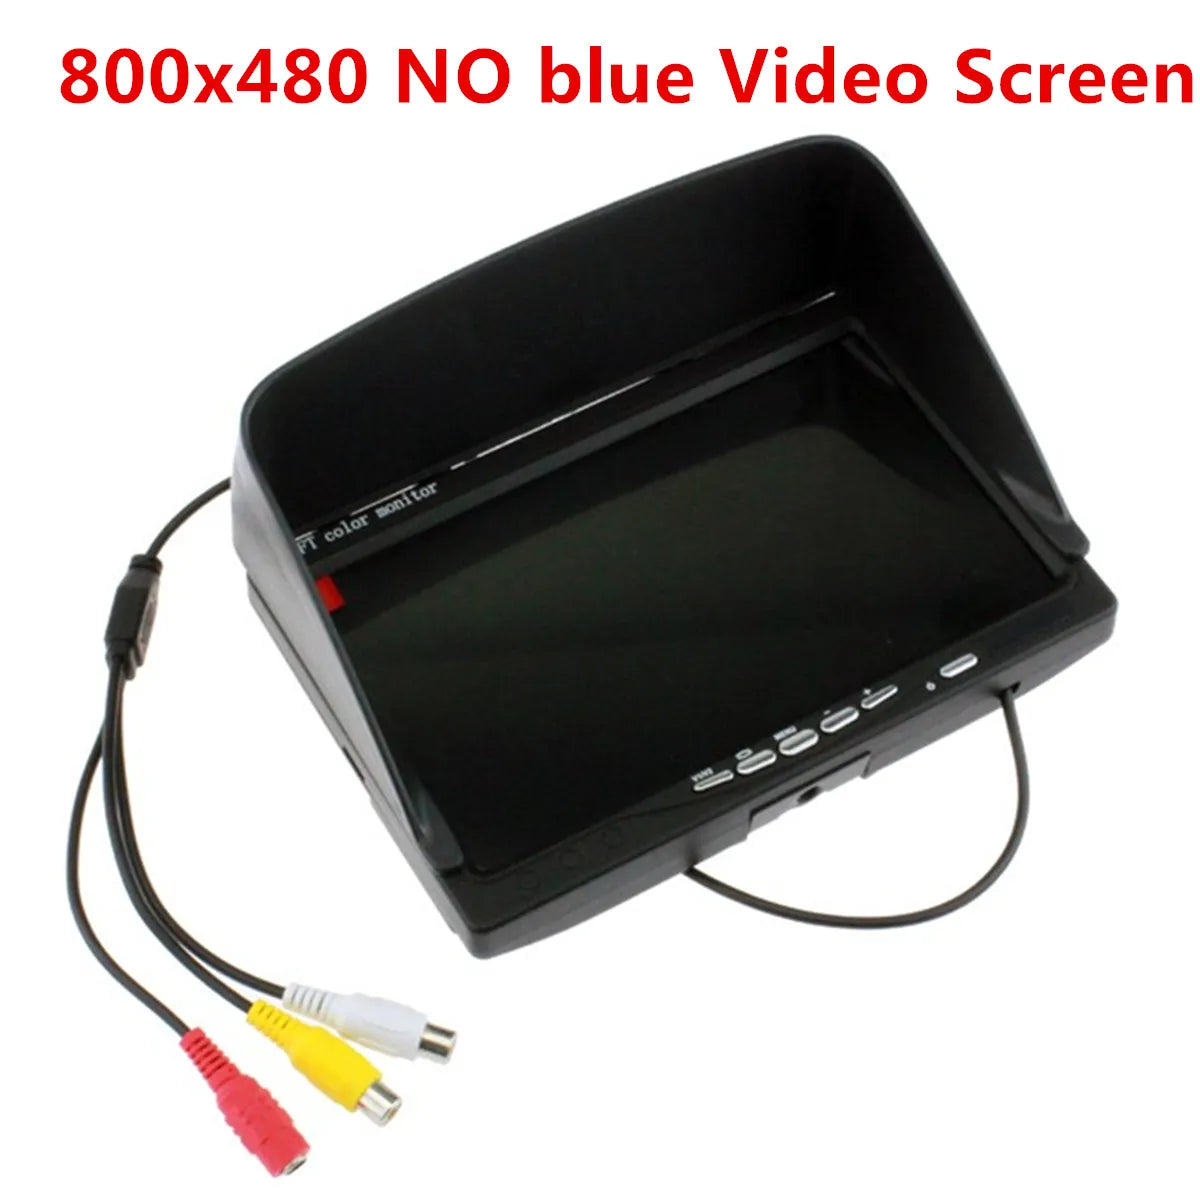 FPV 7 inch Not Blue Video Screen LCD TFT Monitor Photography HD 800x480 Screen w/Sun Shade for DJI Phantom QAV250 Ground Station